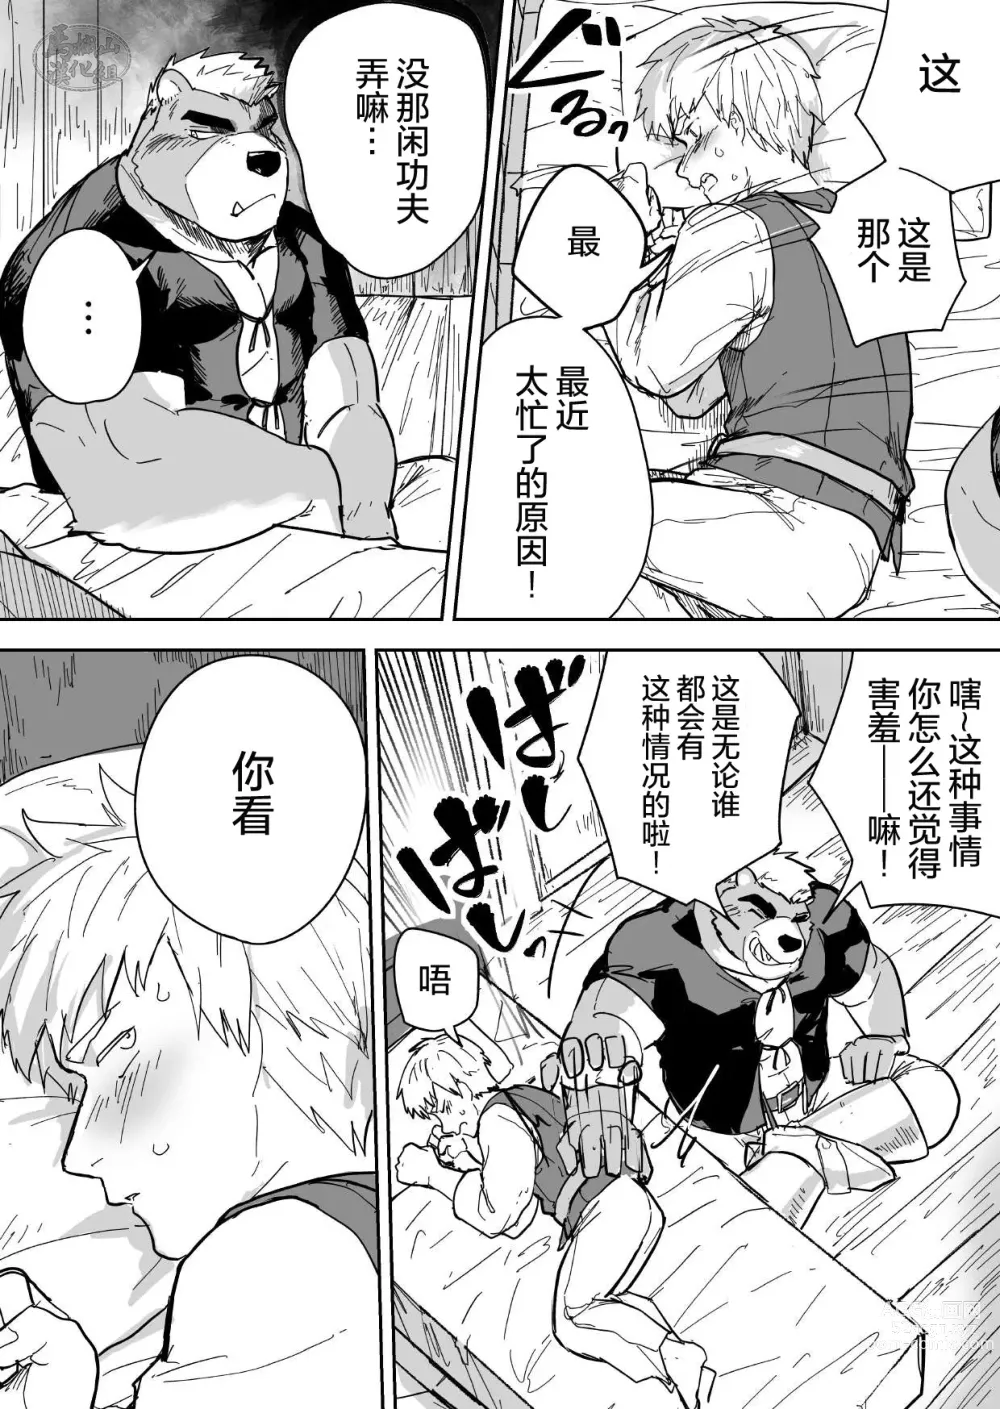 Page 9 of doujinshi Aibou Gachimuchi Kemonohito Senshi to Aibou Ijou ni Naru Hanashi｜ 当伙伴是强壮兽人战士之后和他超越友谊的故事